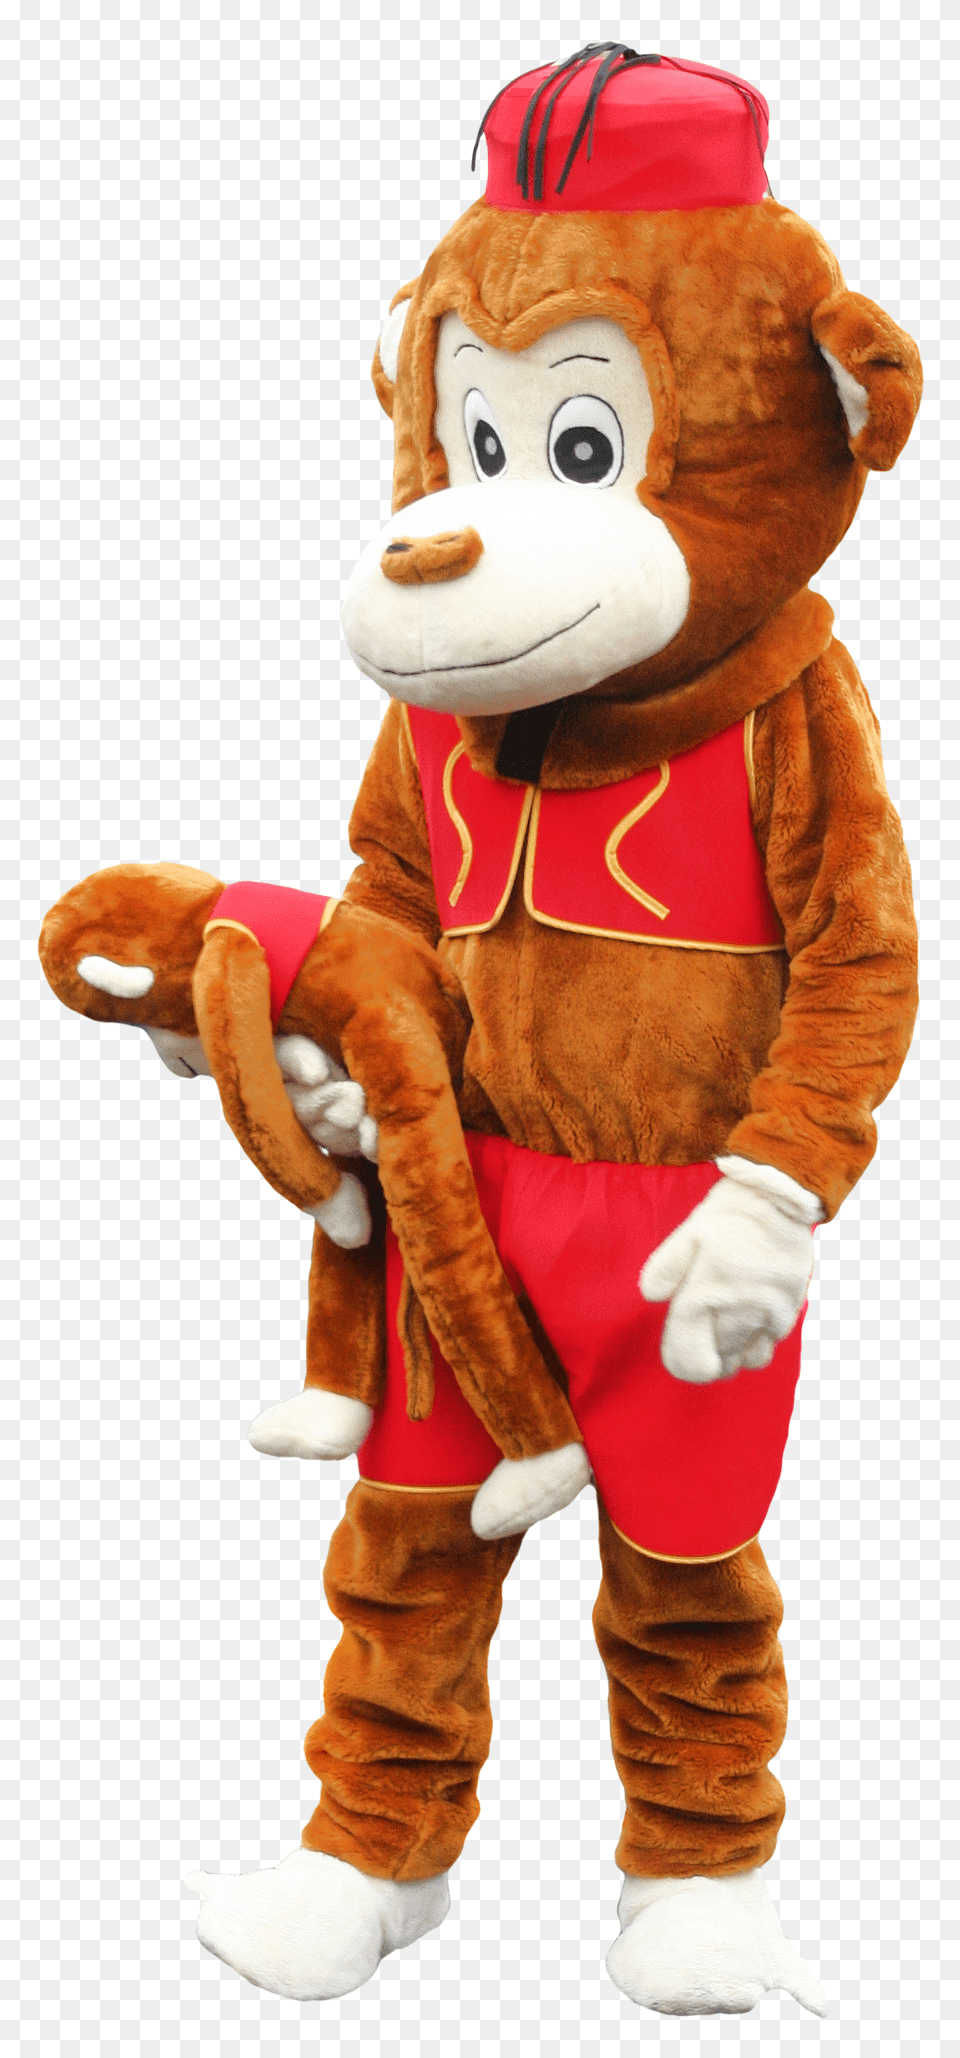 Pngpix Com Monkey Toy Transparent Clothing, Glove, Mascot Png Image